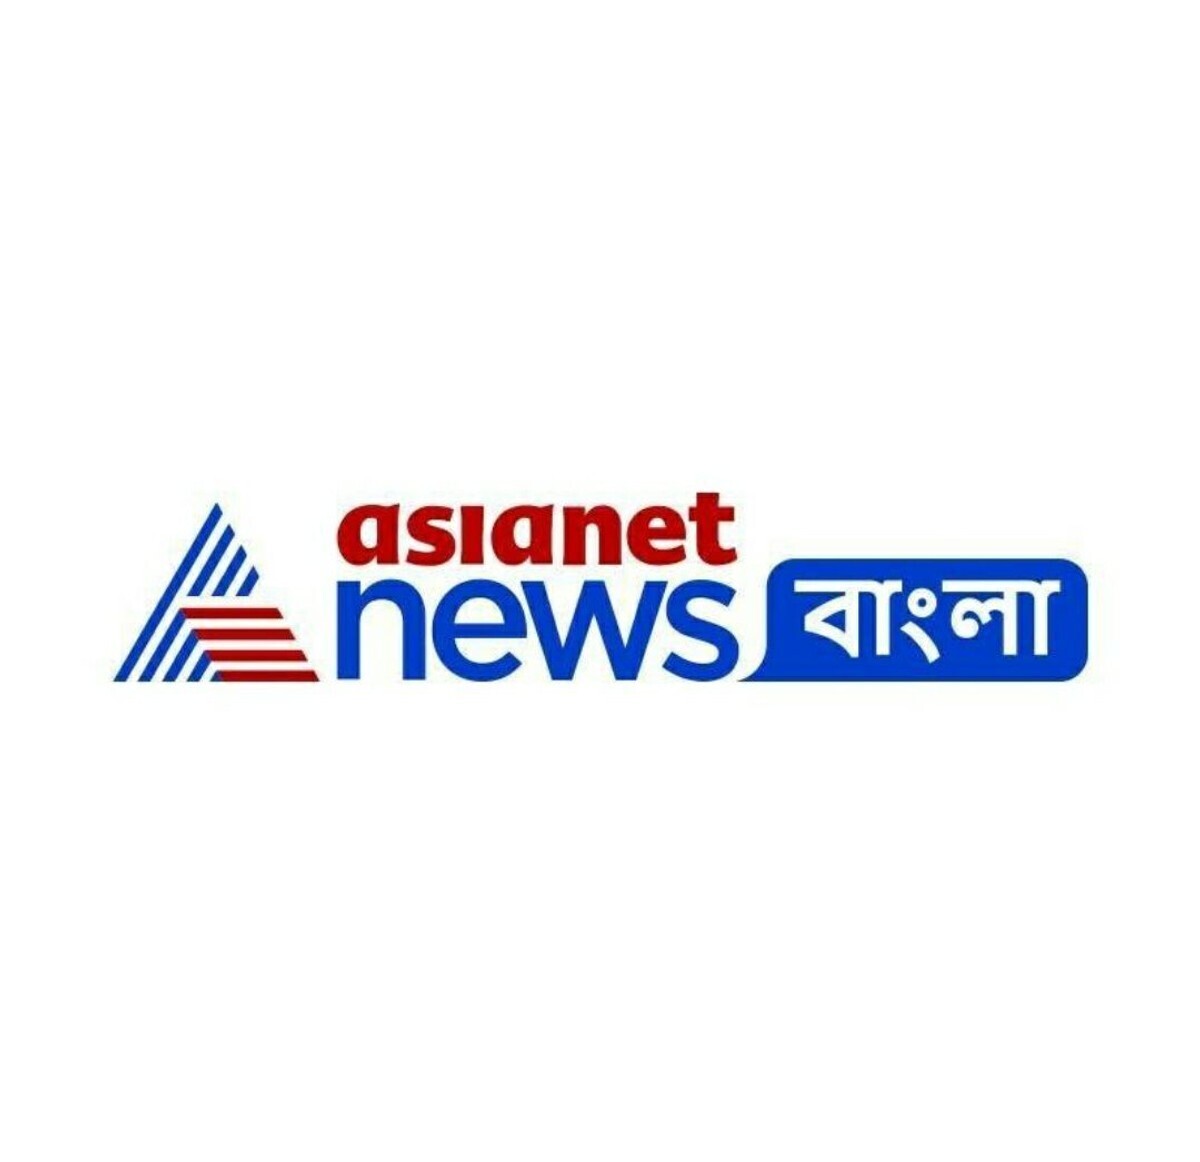 Asianetnews Bangla photo